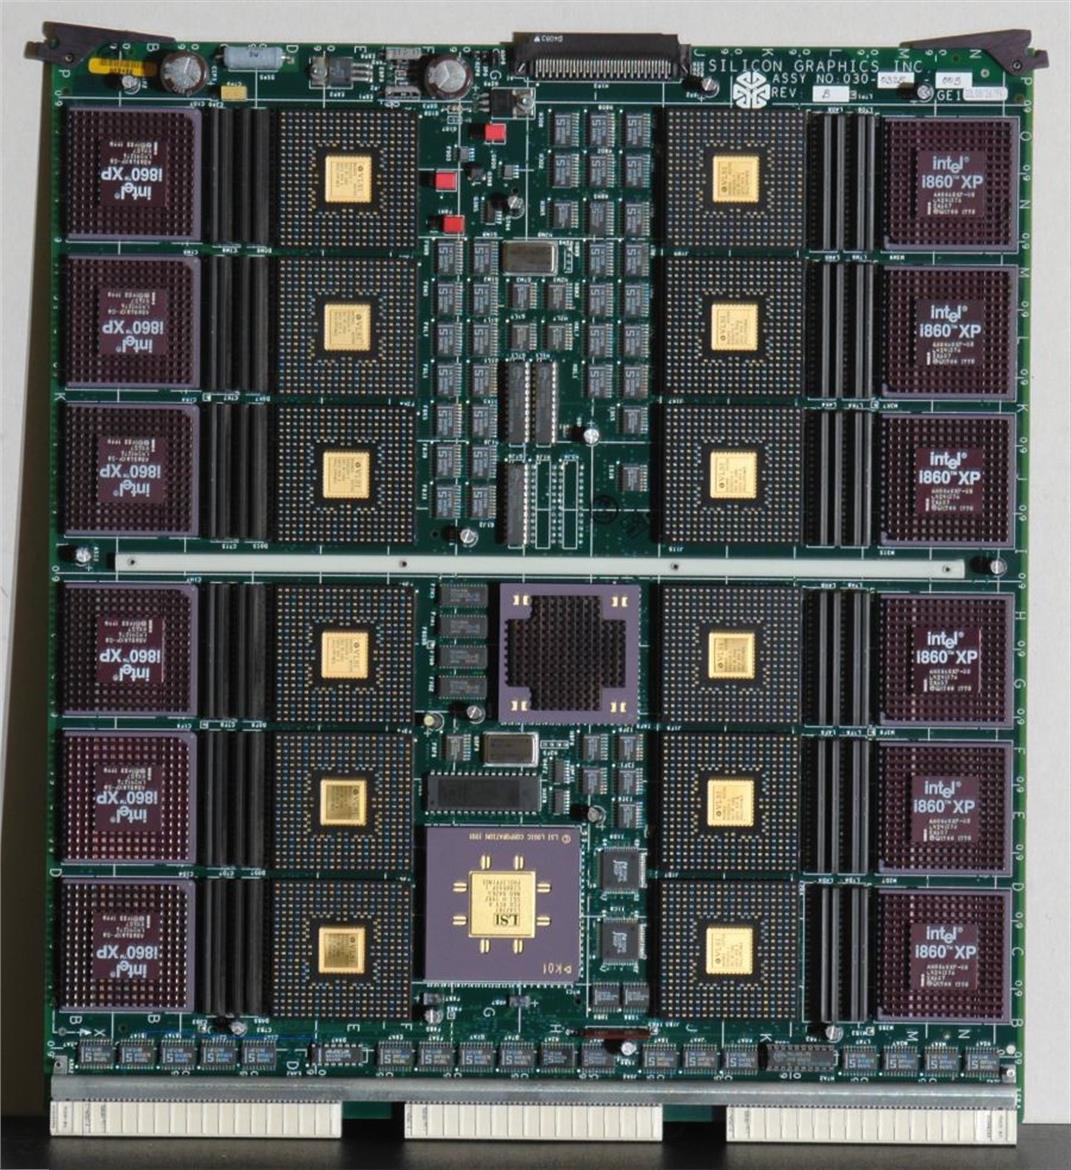 AMD FirePro W8000, W9000 Challenge Nvidia's Quadro